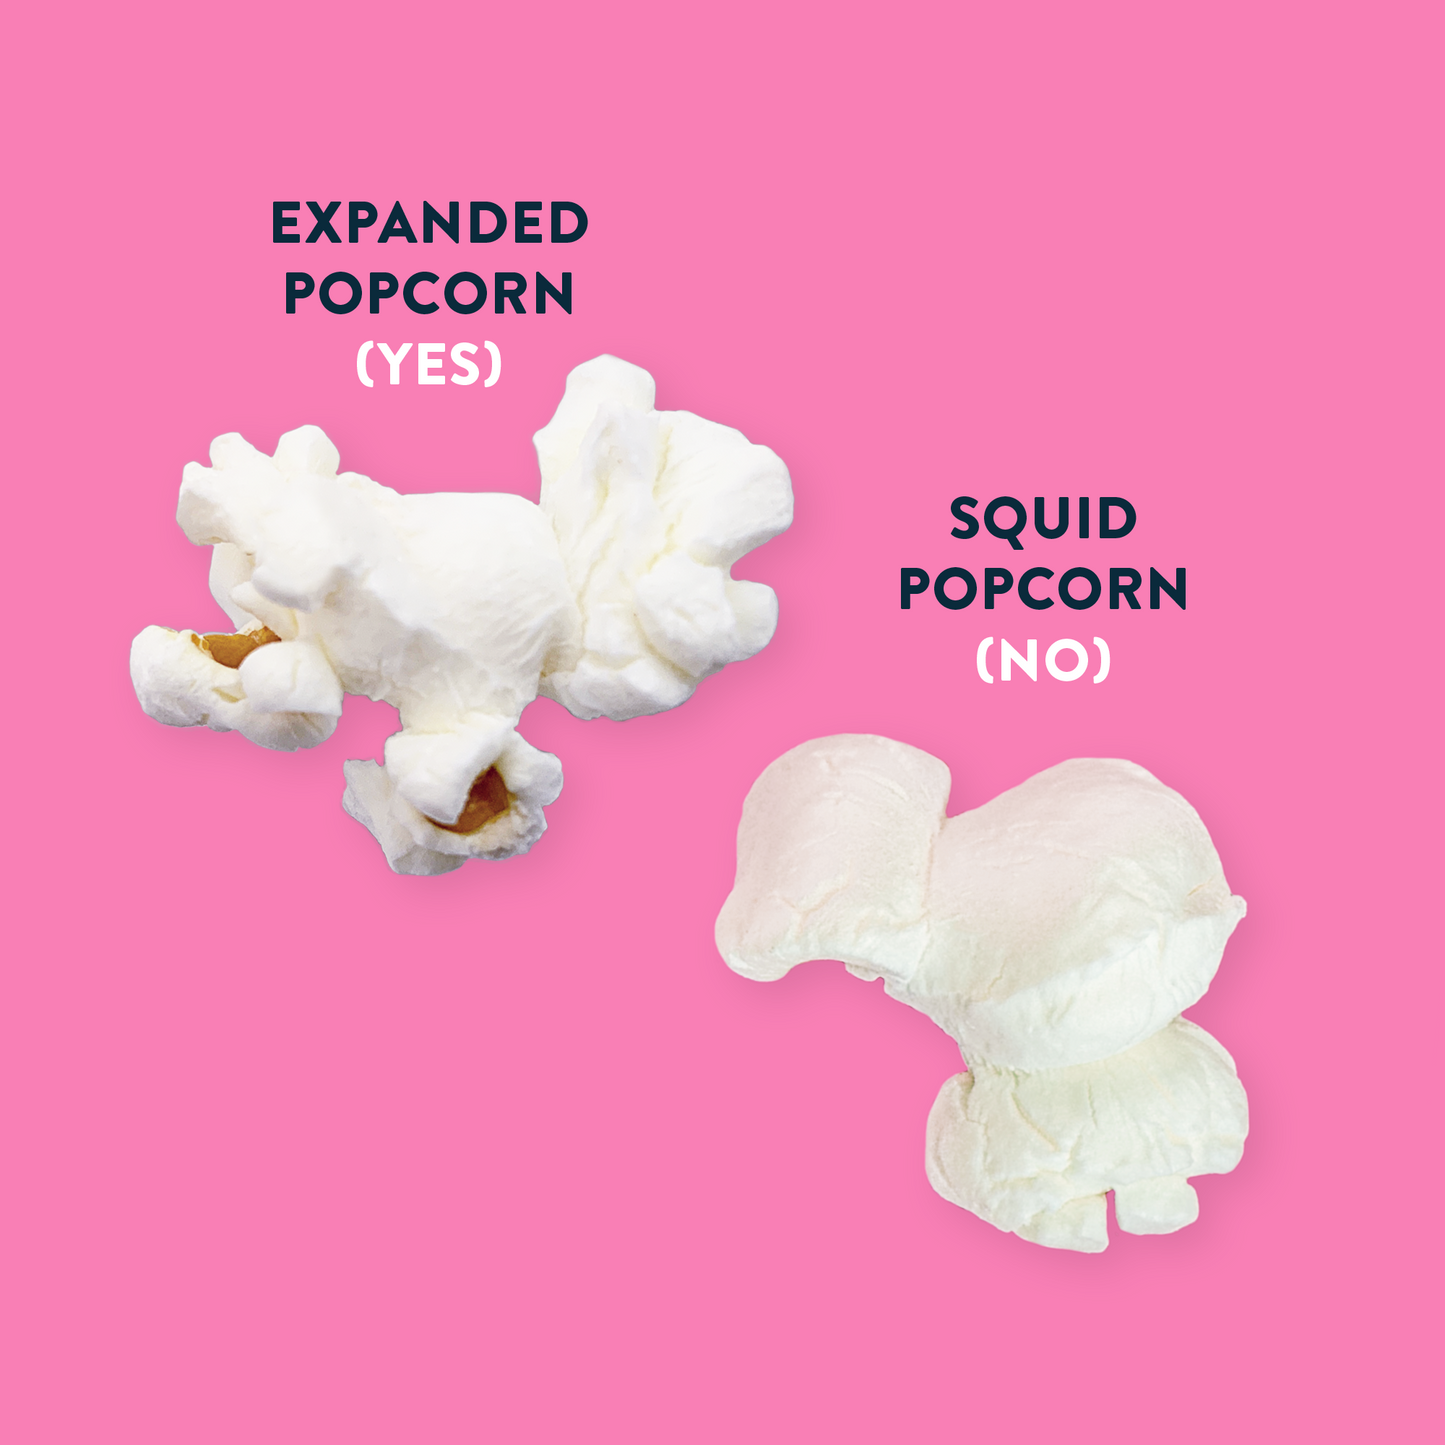 Non GMO & Organic Popcorn Kernels